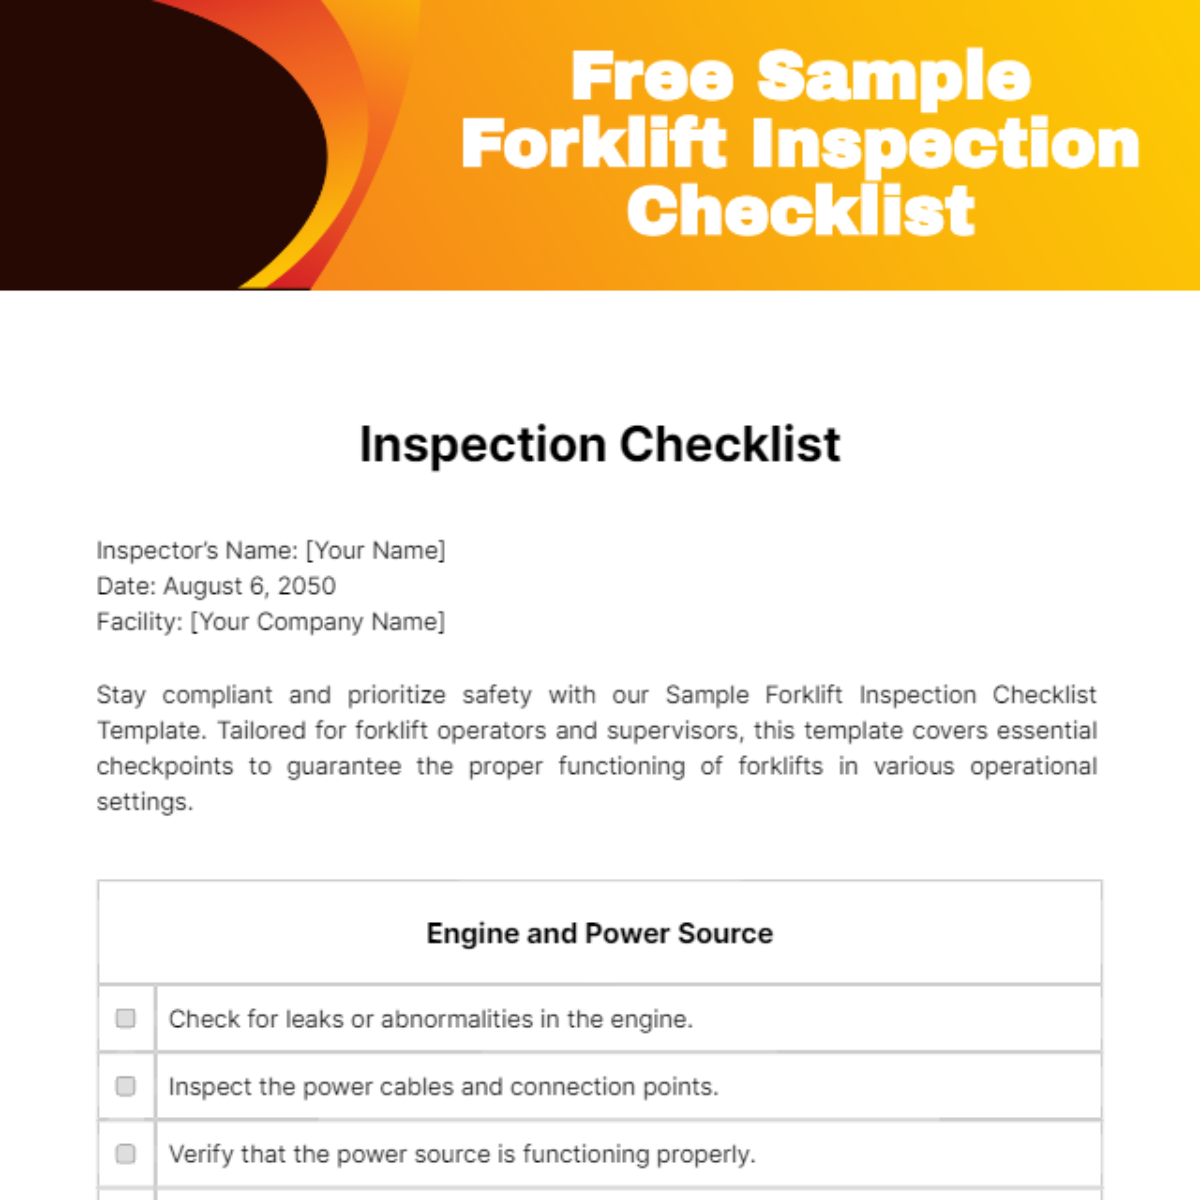 Sample Forklift Inspection Checklist Template